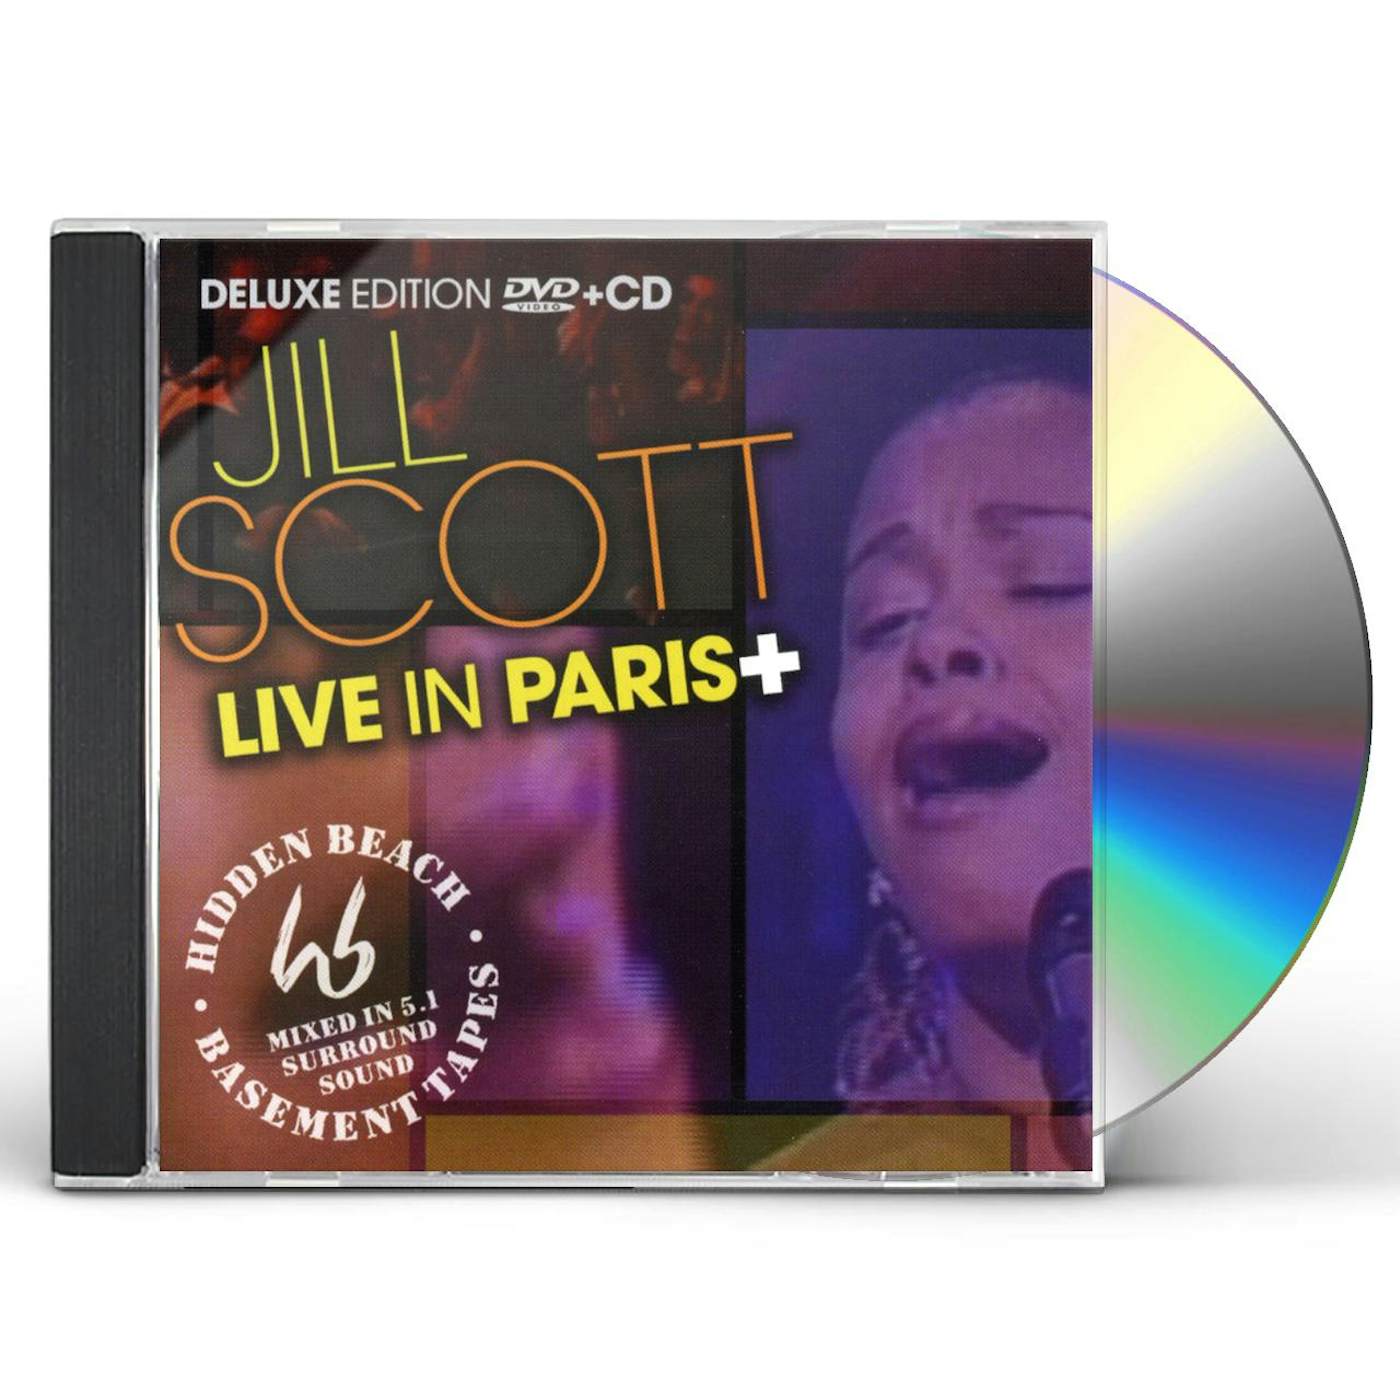 Jill Scott LIVE IN PARIS + CD